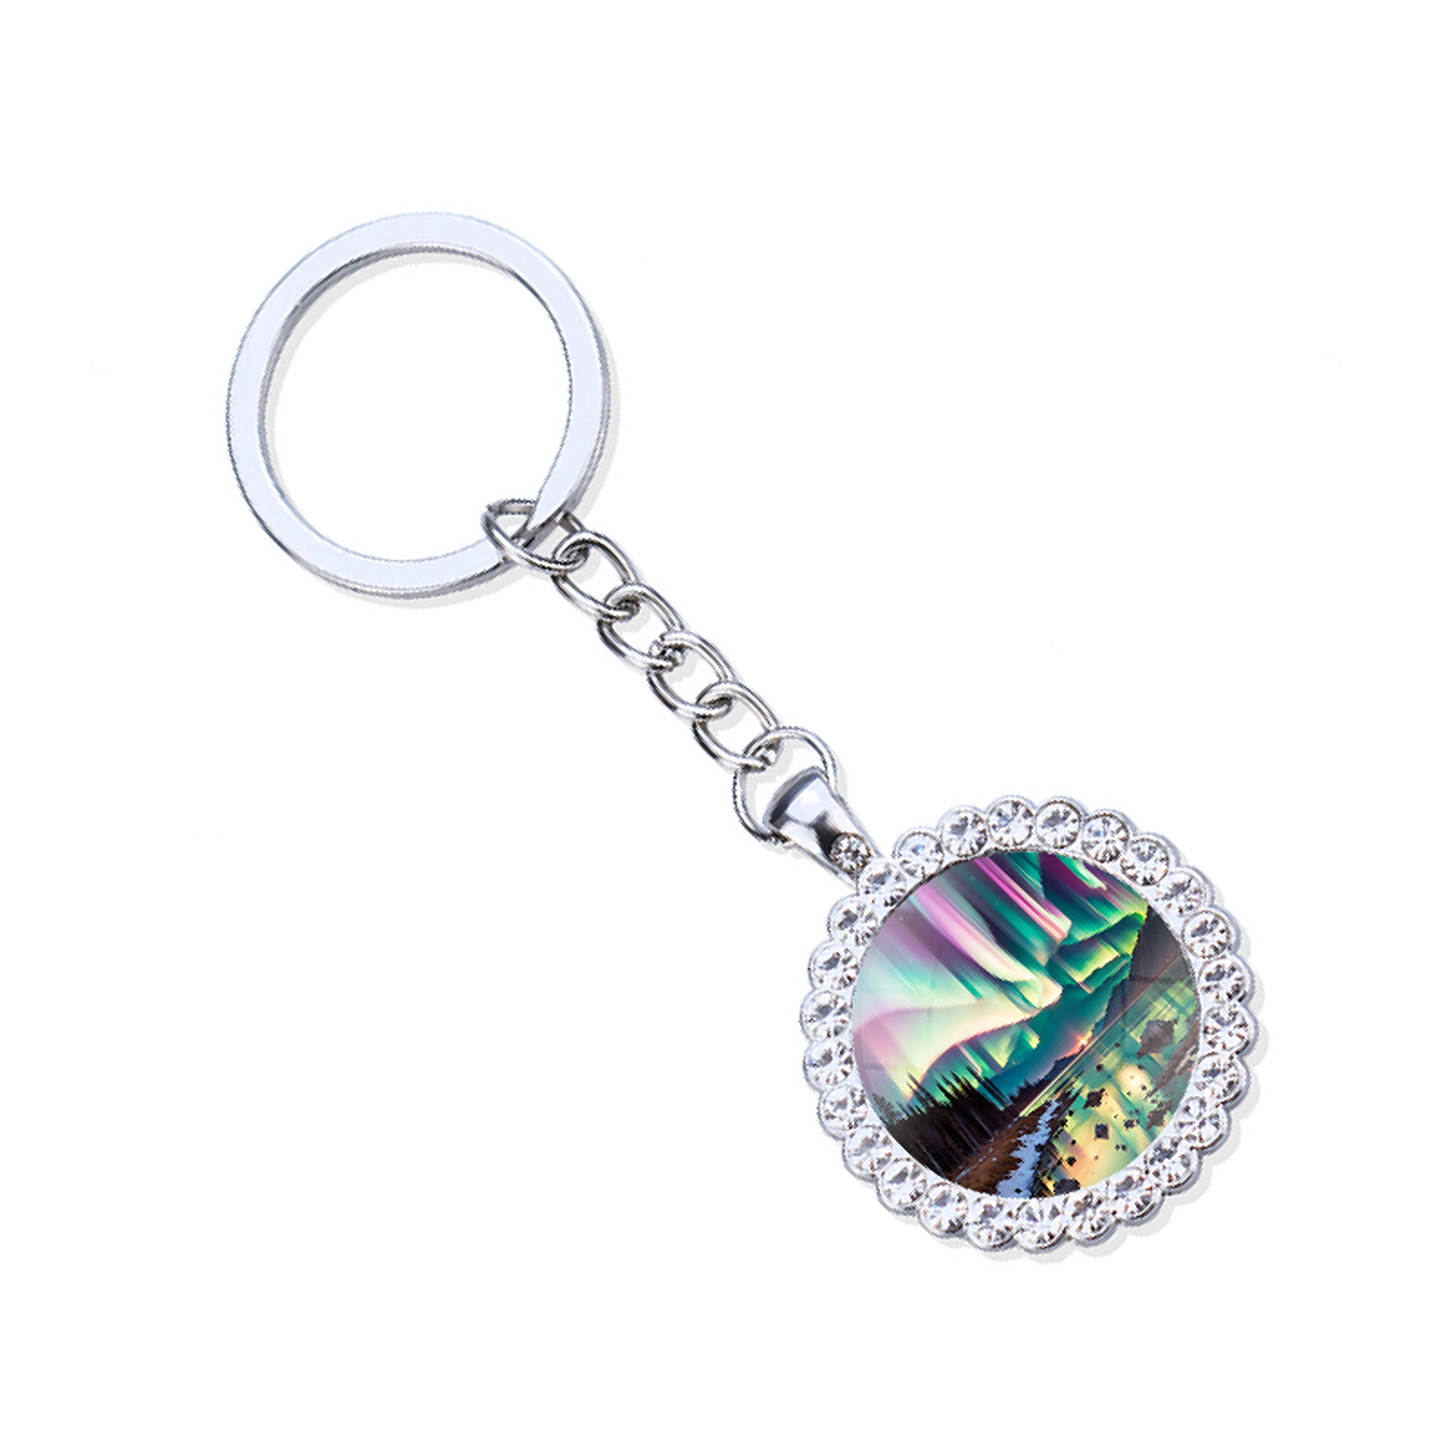 Aurora Borealis Silver Keyring - Northern Light Jewelry - Rhinestones Glass Key Chain - Perfect Aurora Lovers Gift 7